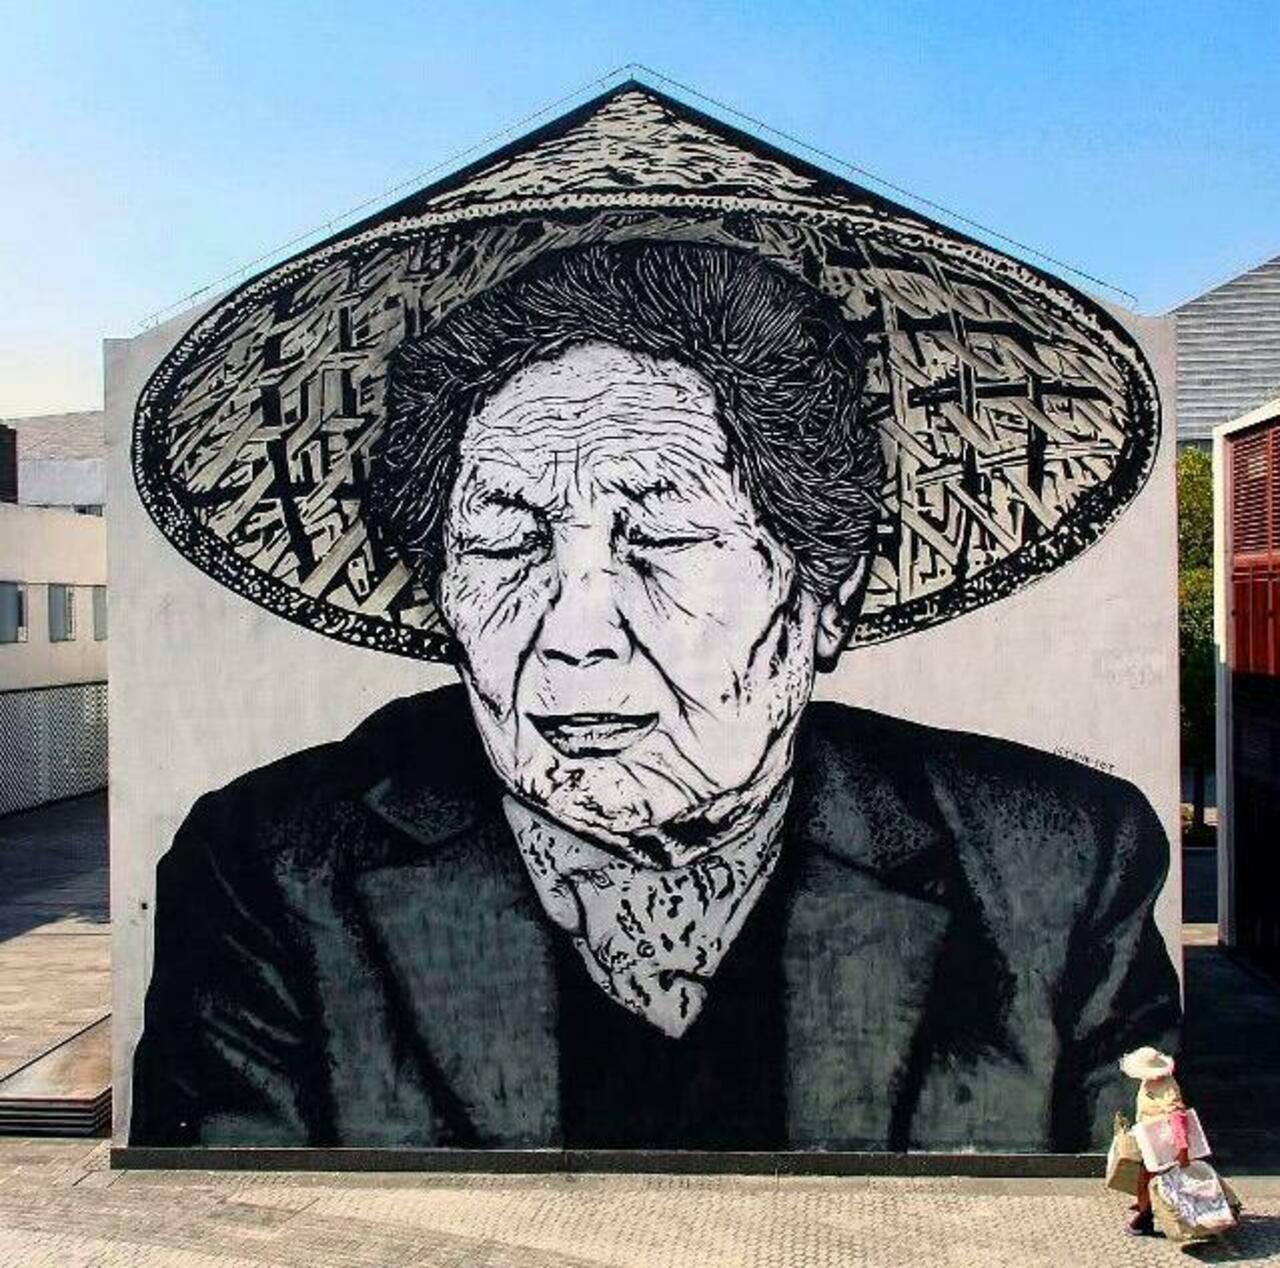 New Street Art by icy&sot in Shanghai  

#art #graffiti #mural #streetart http://t.co/PpdaFhrCi7